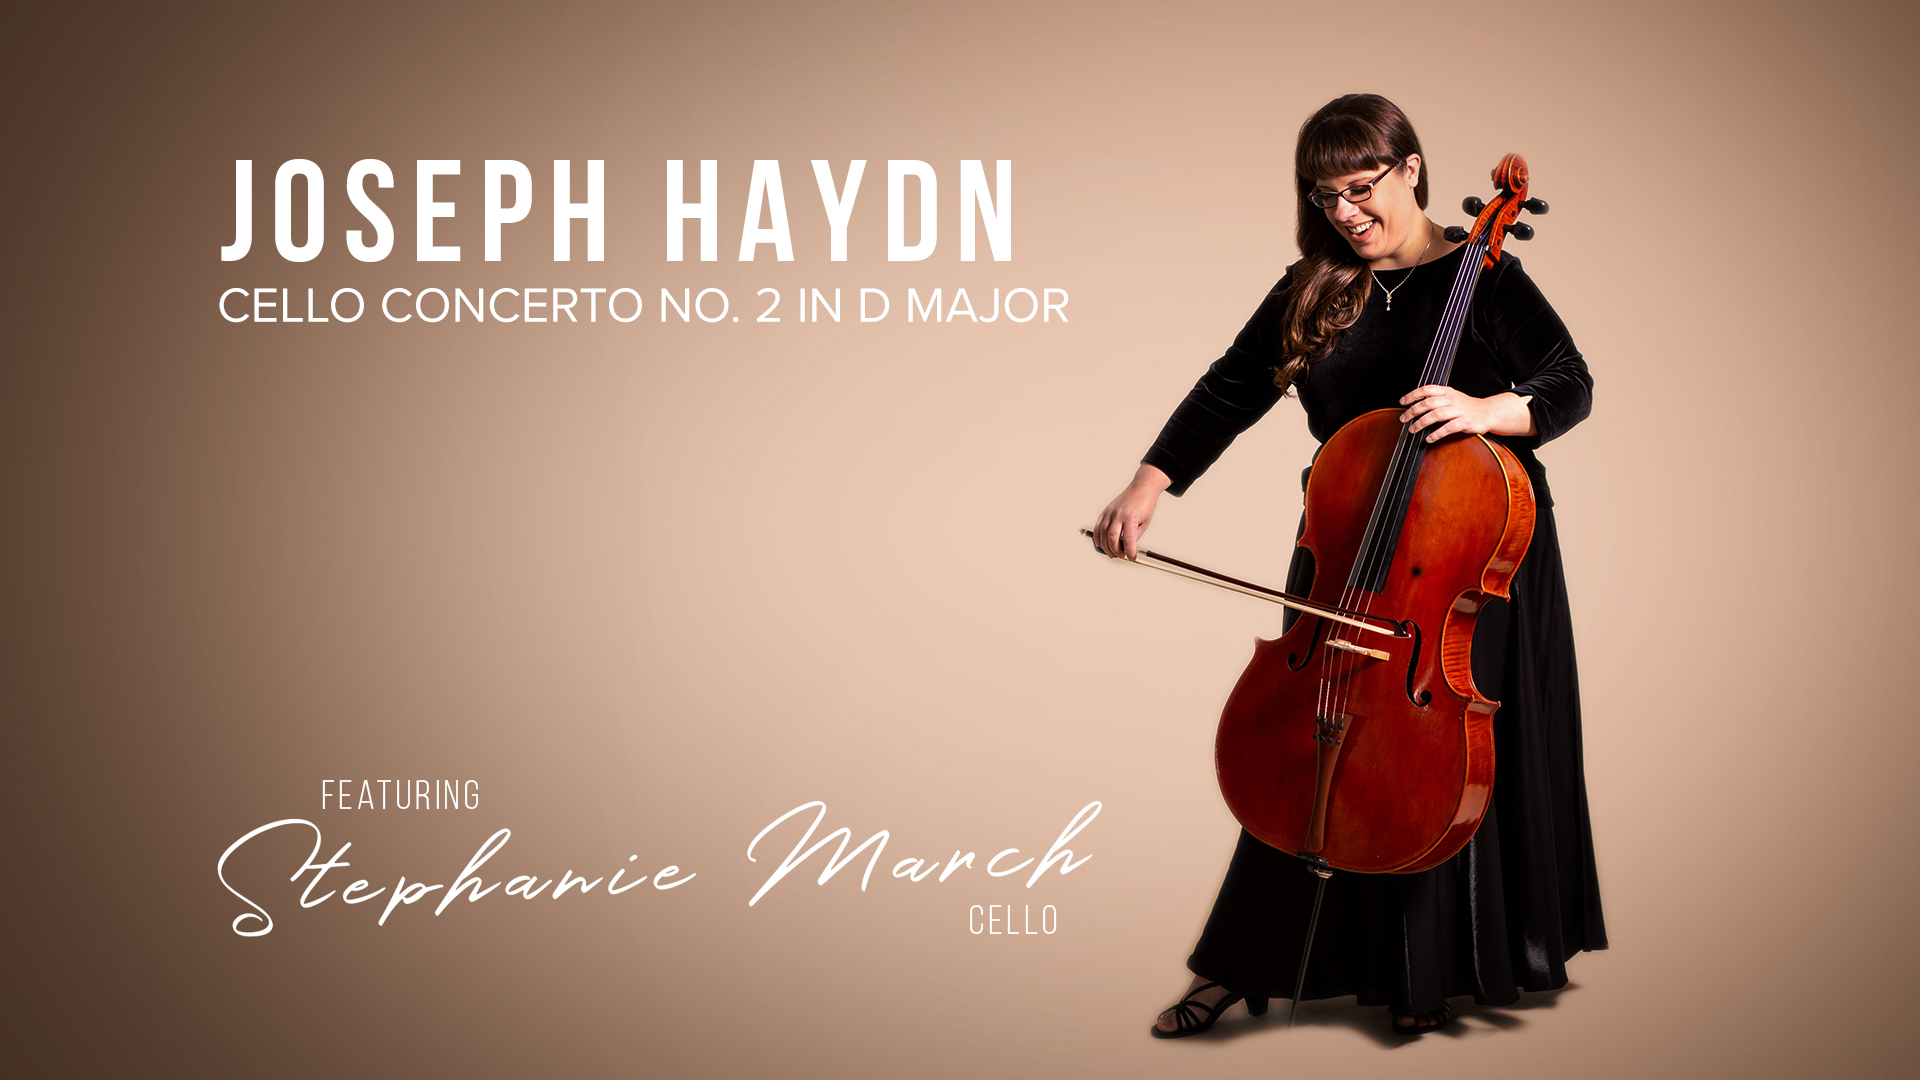 Joseph Haydn, Cello Concerto No. 2 in D Major - featuring 